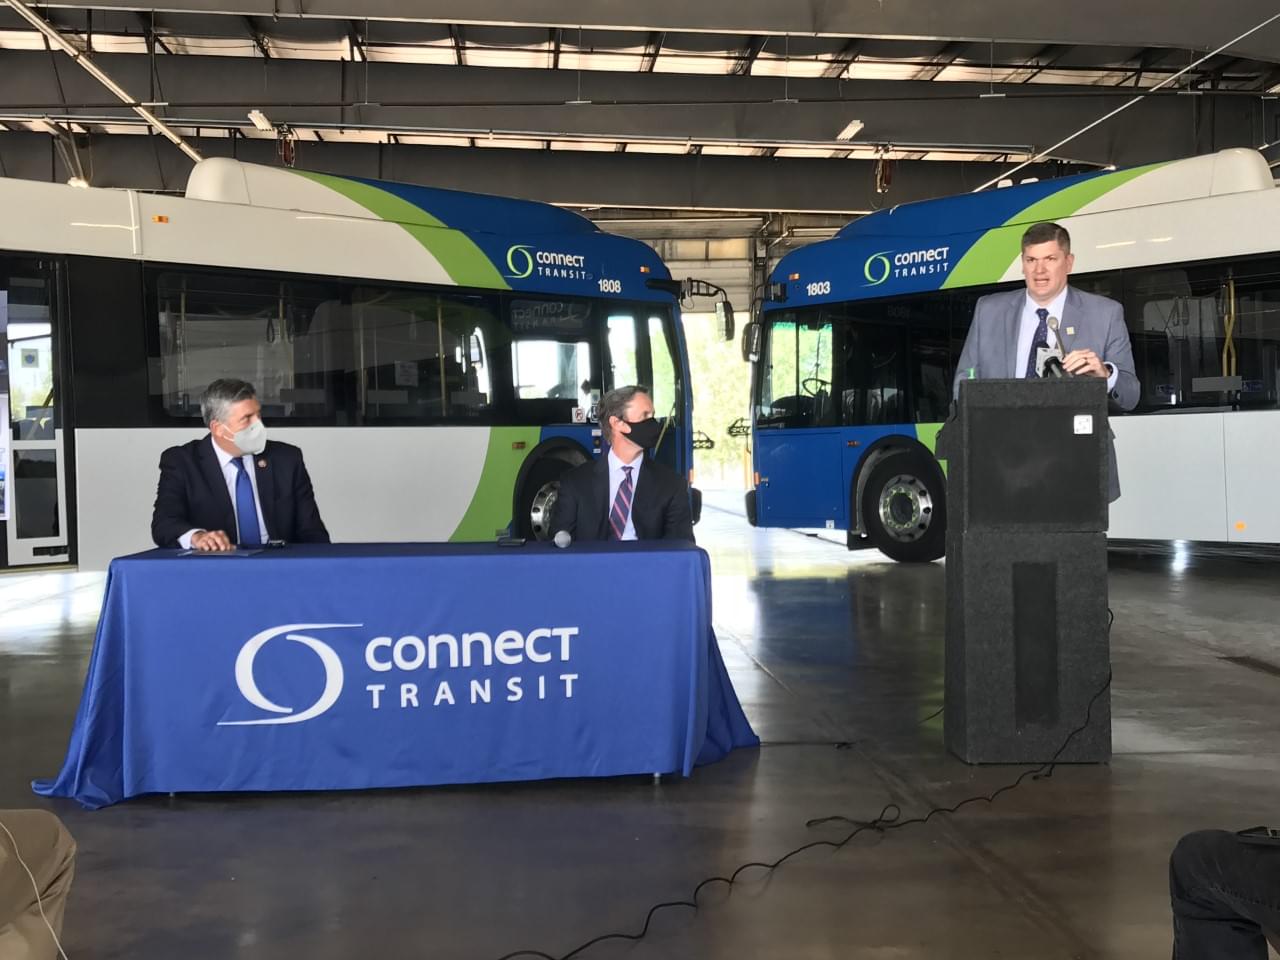 Central Illinois congressmen announce $8 million Connect Transit grant